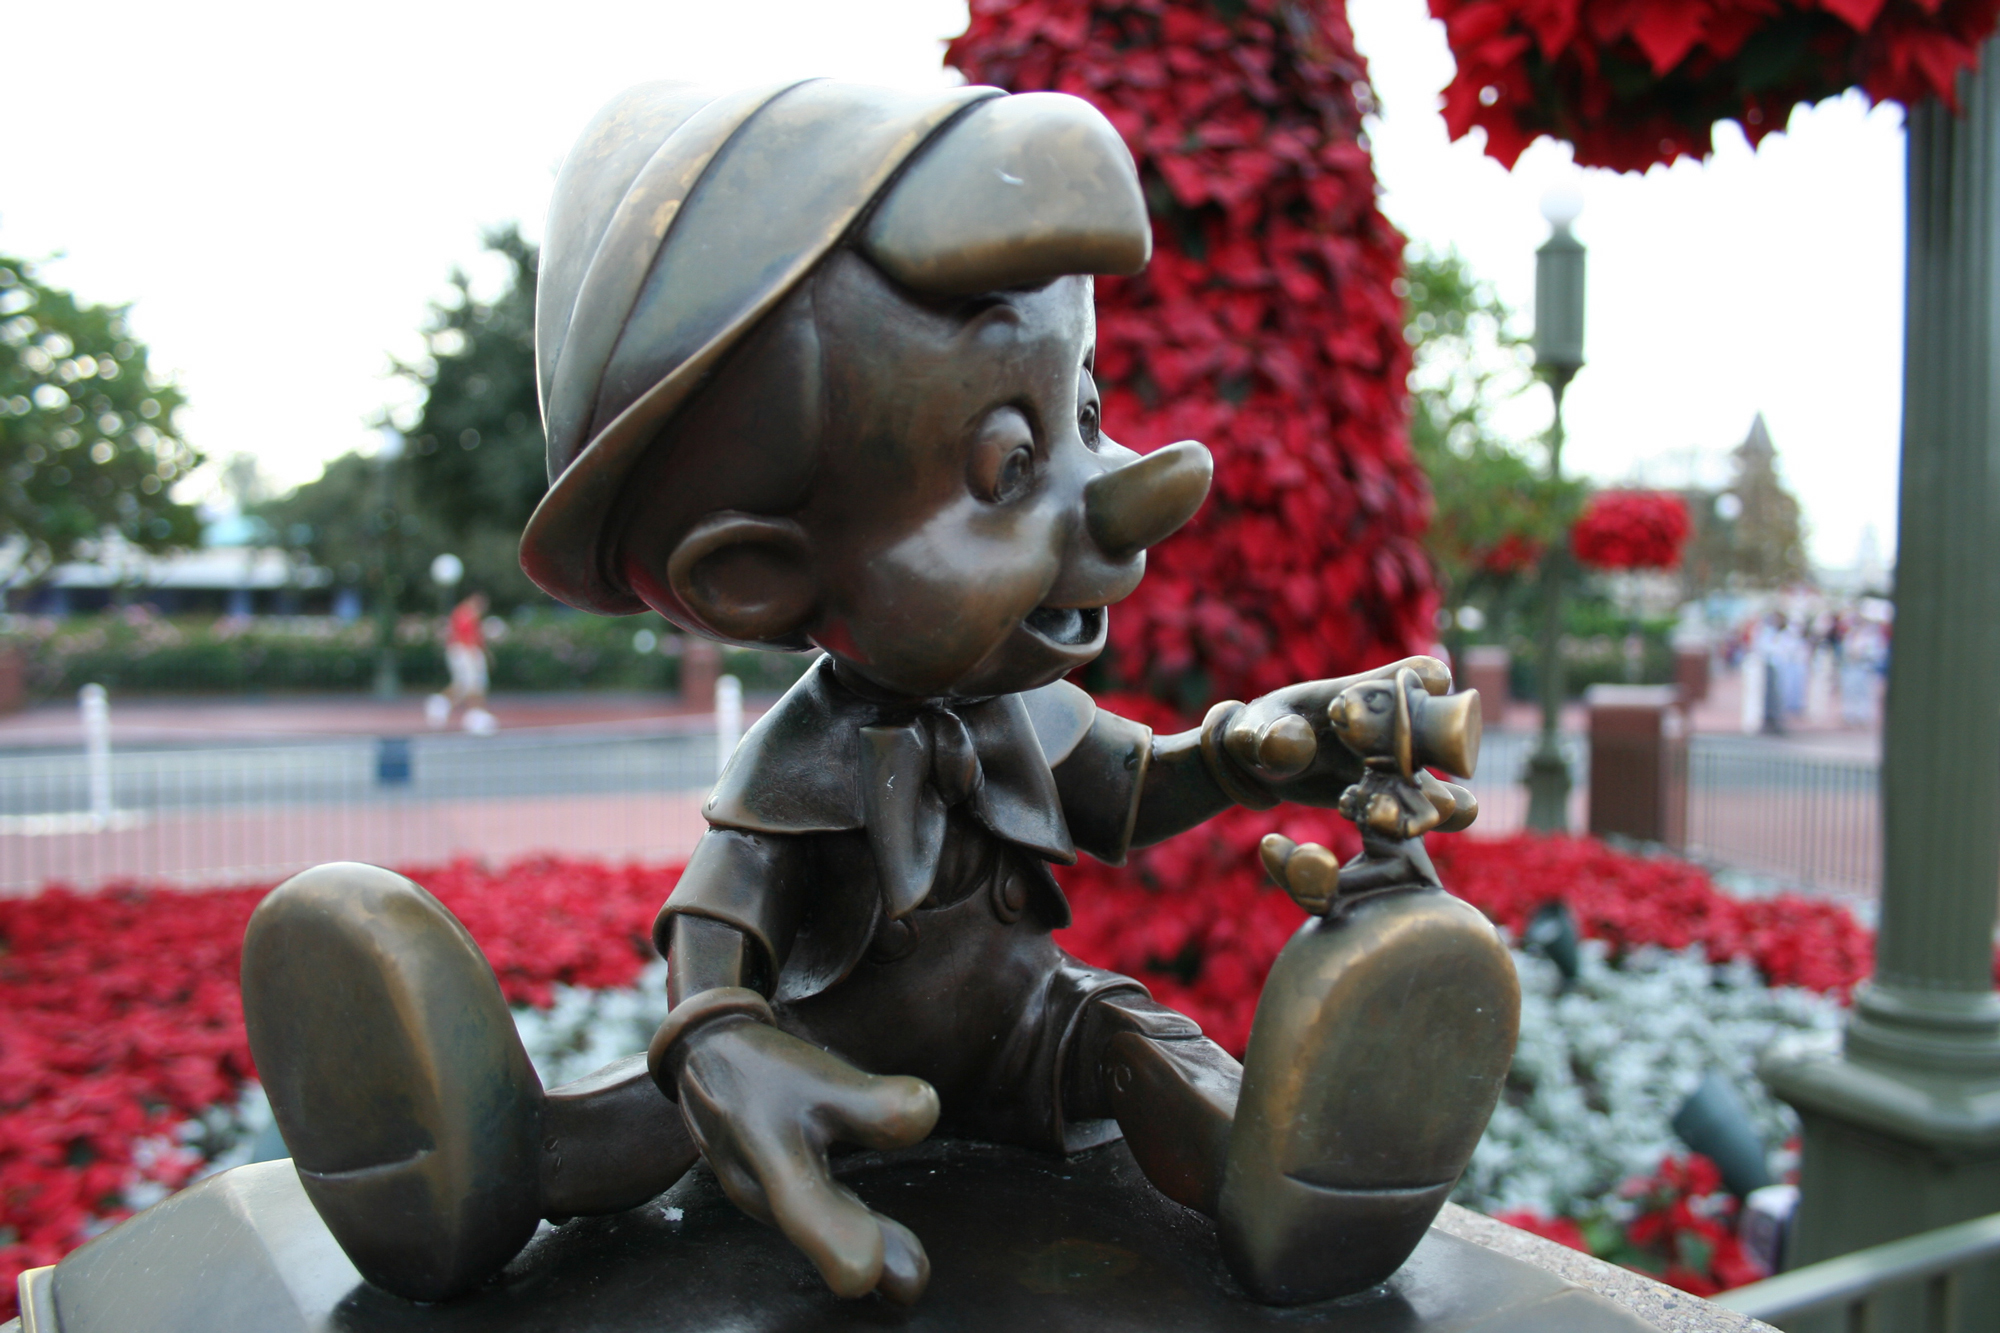 Pinocchio statue in front of Cinderella's Castle at the Magic Kingdom